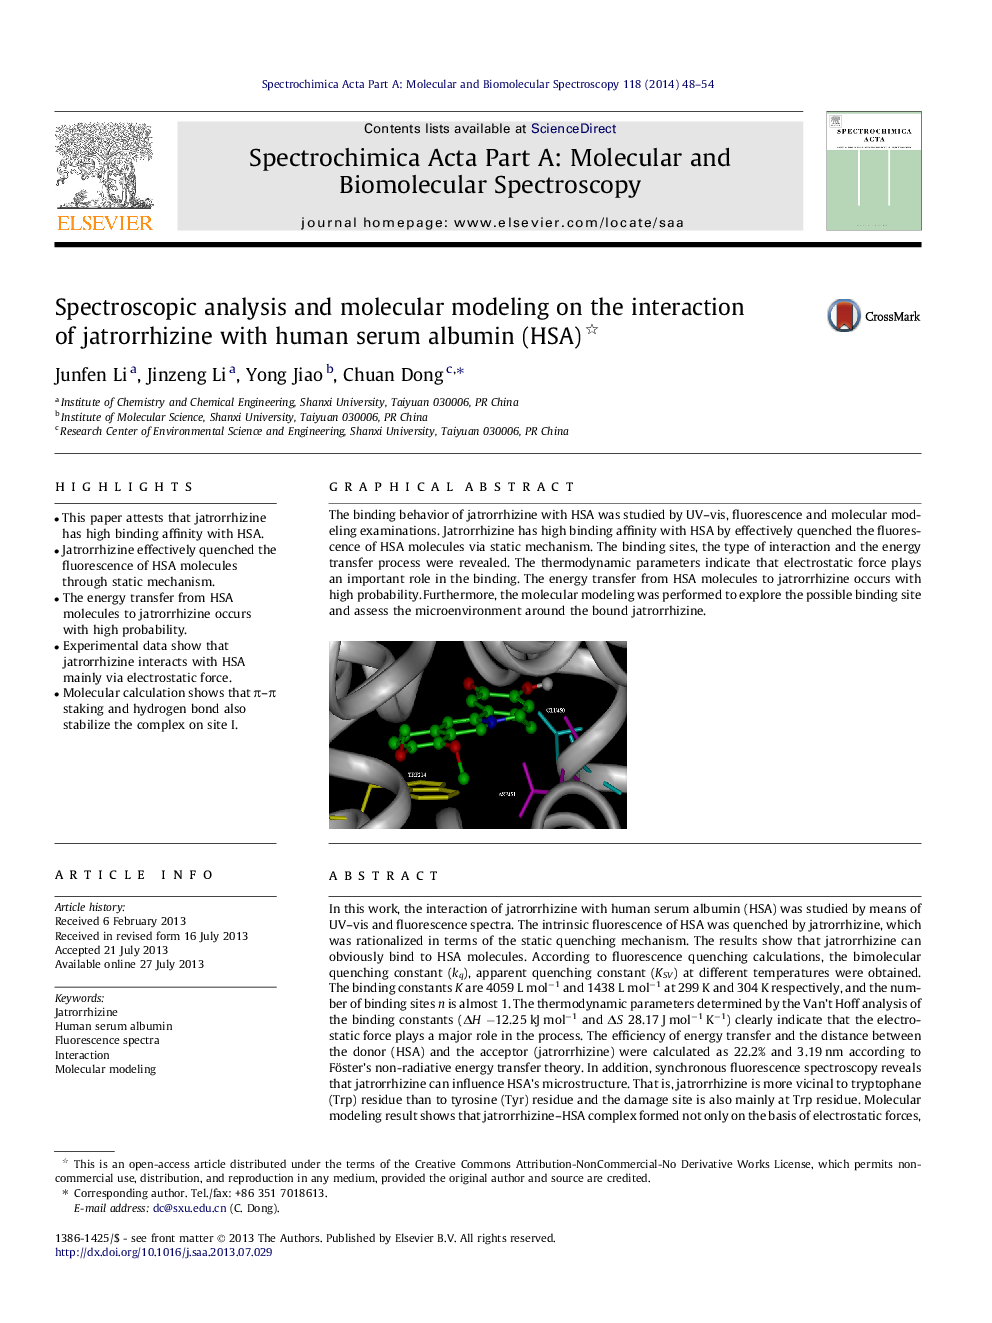 Spectroscopic analysis and molecular modeling on the interaction of jatrorrhizine with human serum albumin (HSA)